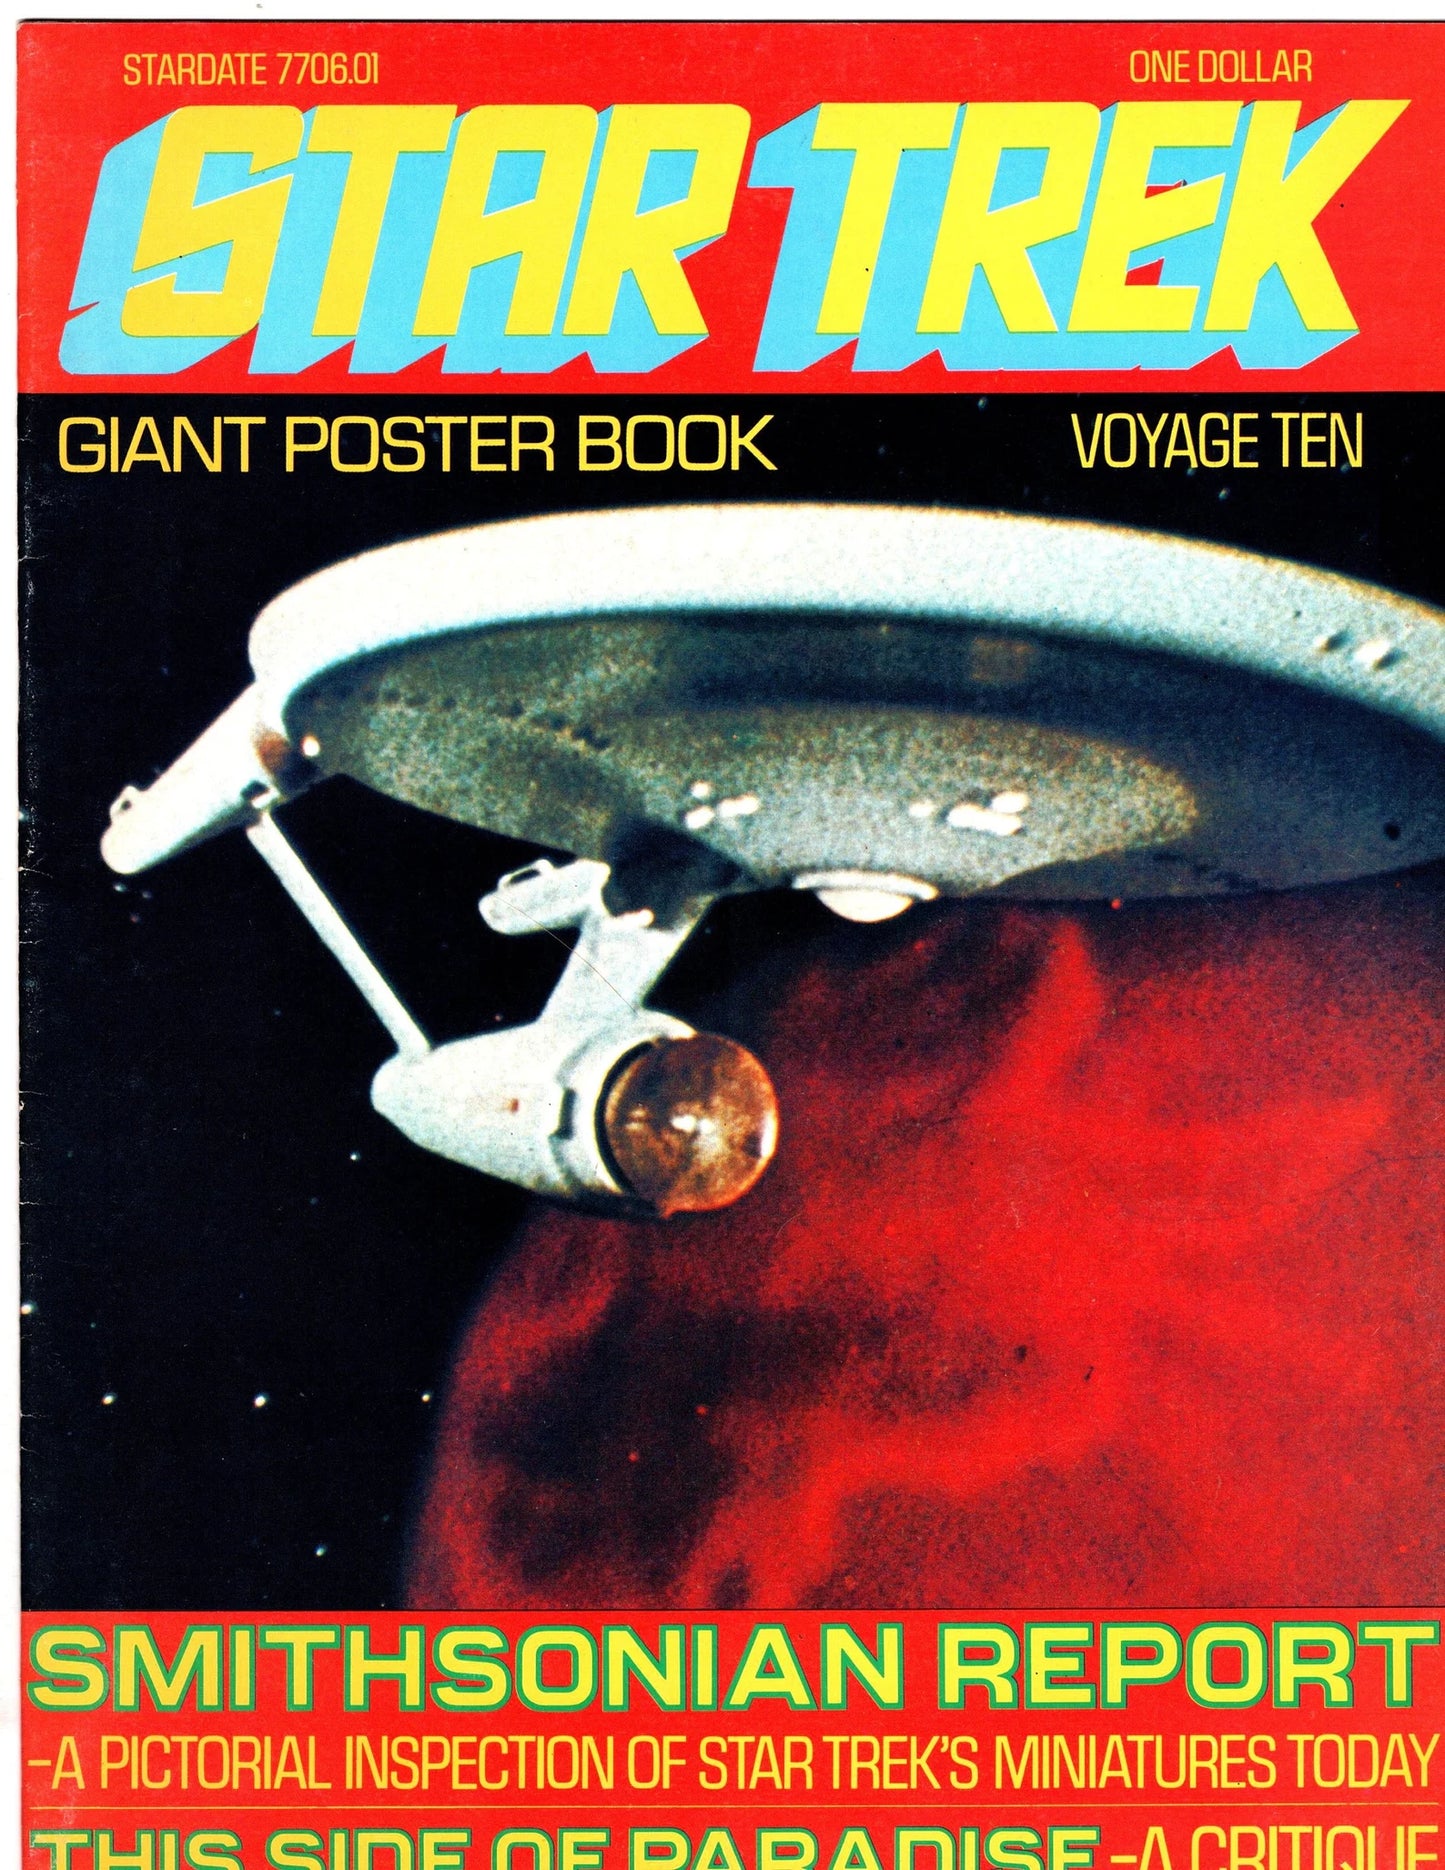 Star Trek Giant Poster book Voyage 10